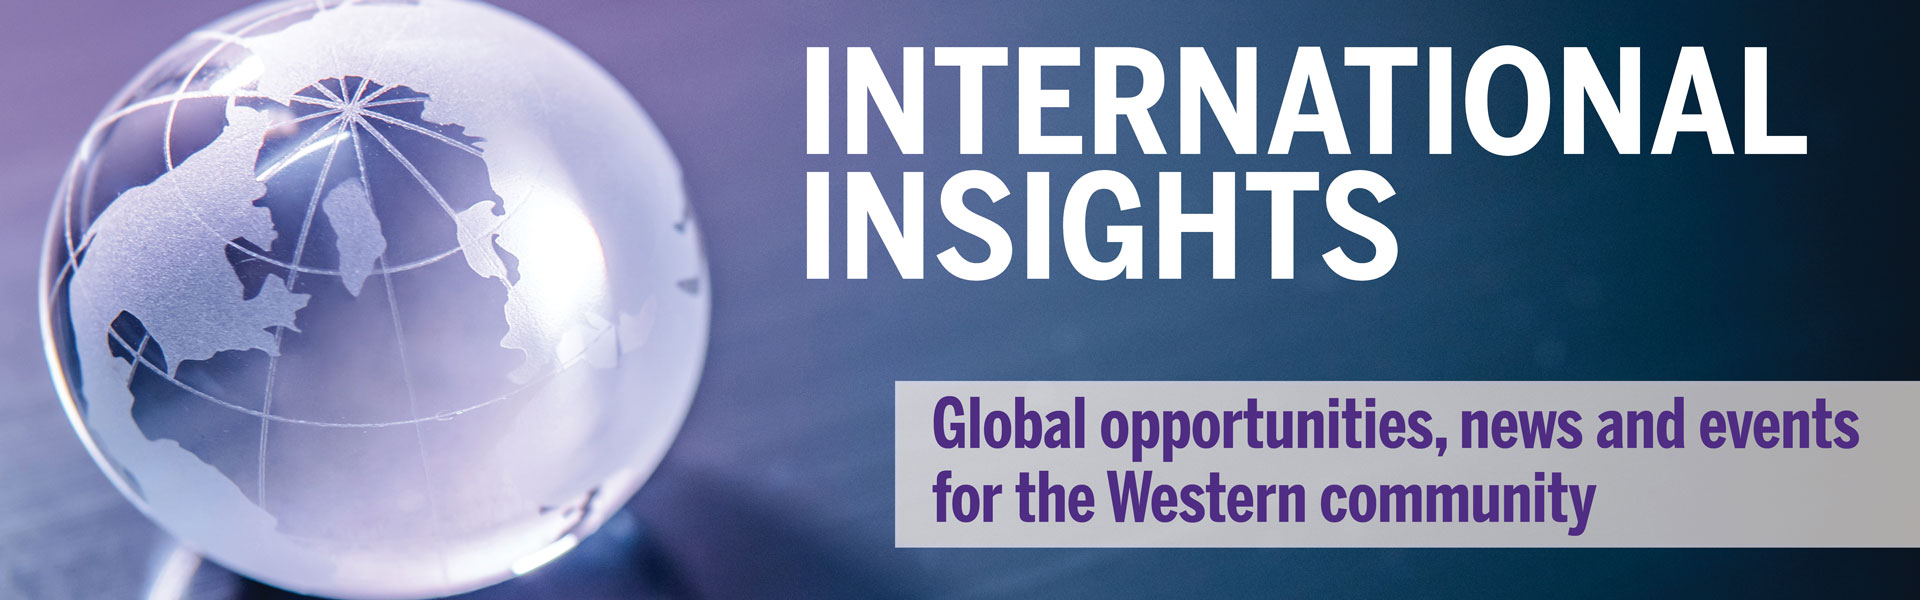 International Insights masthead showing purple globe